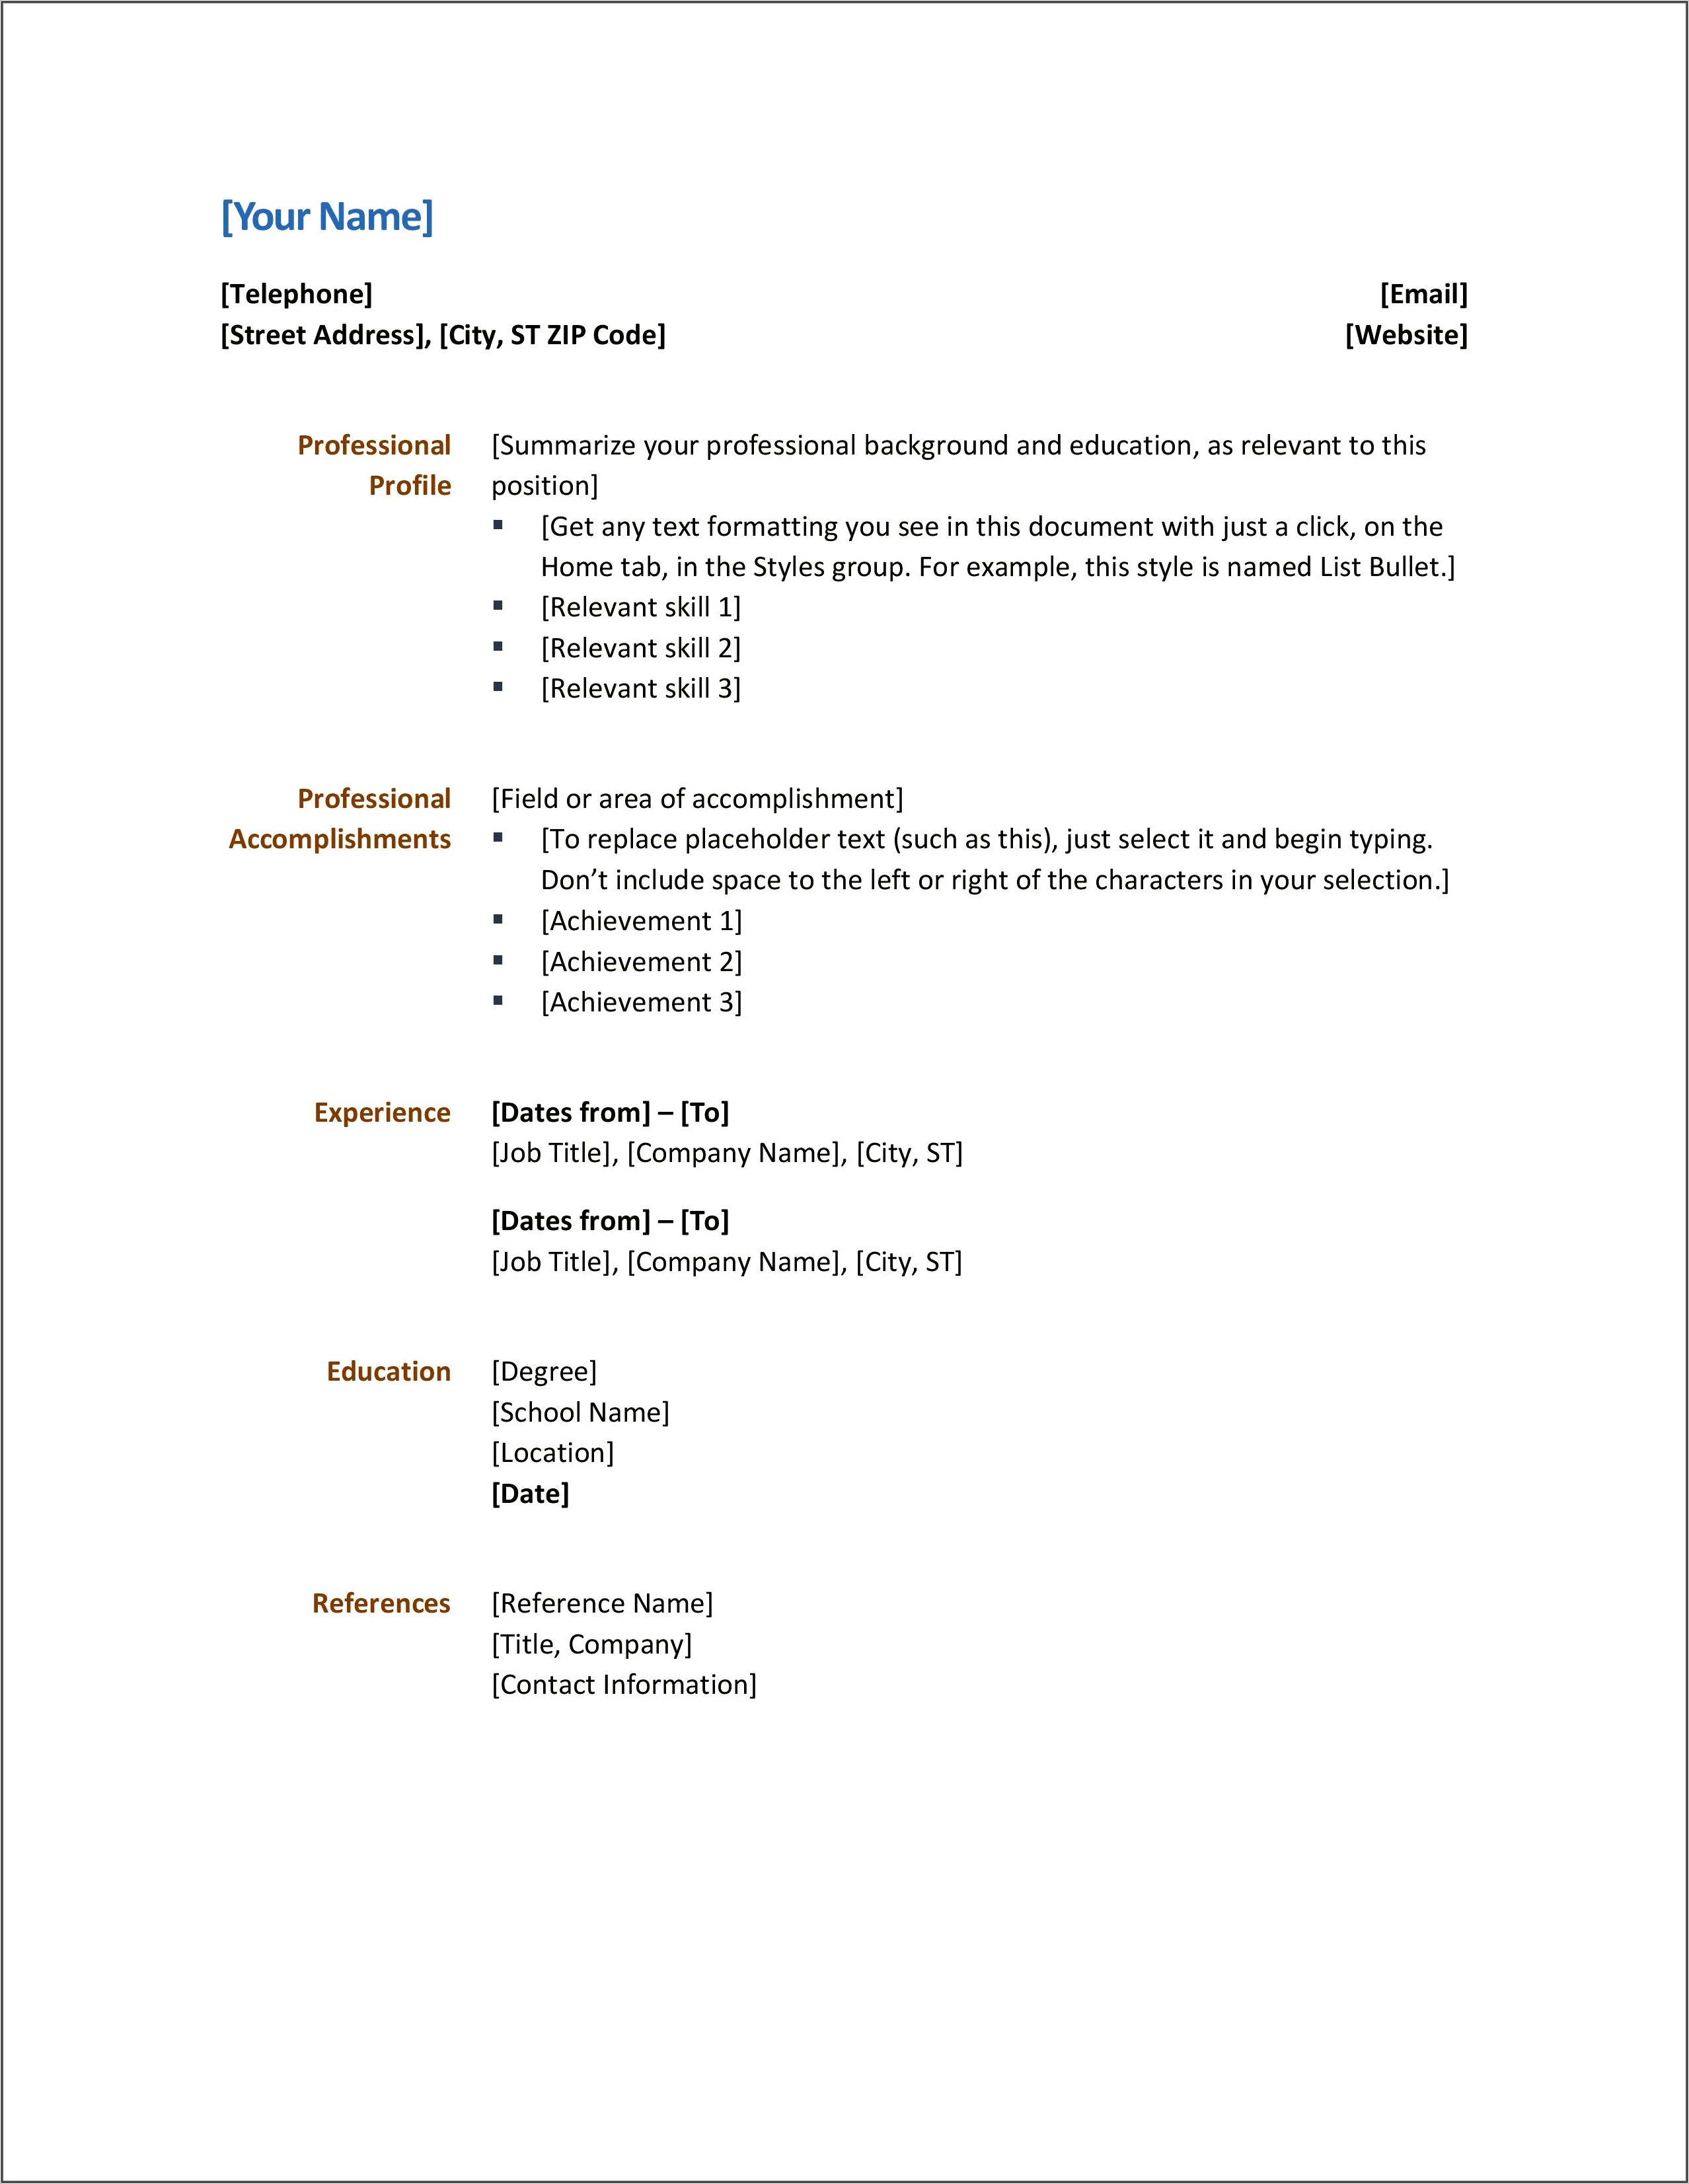 Sample Resume Download In Ms Word